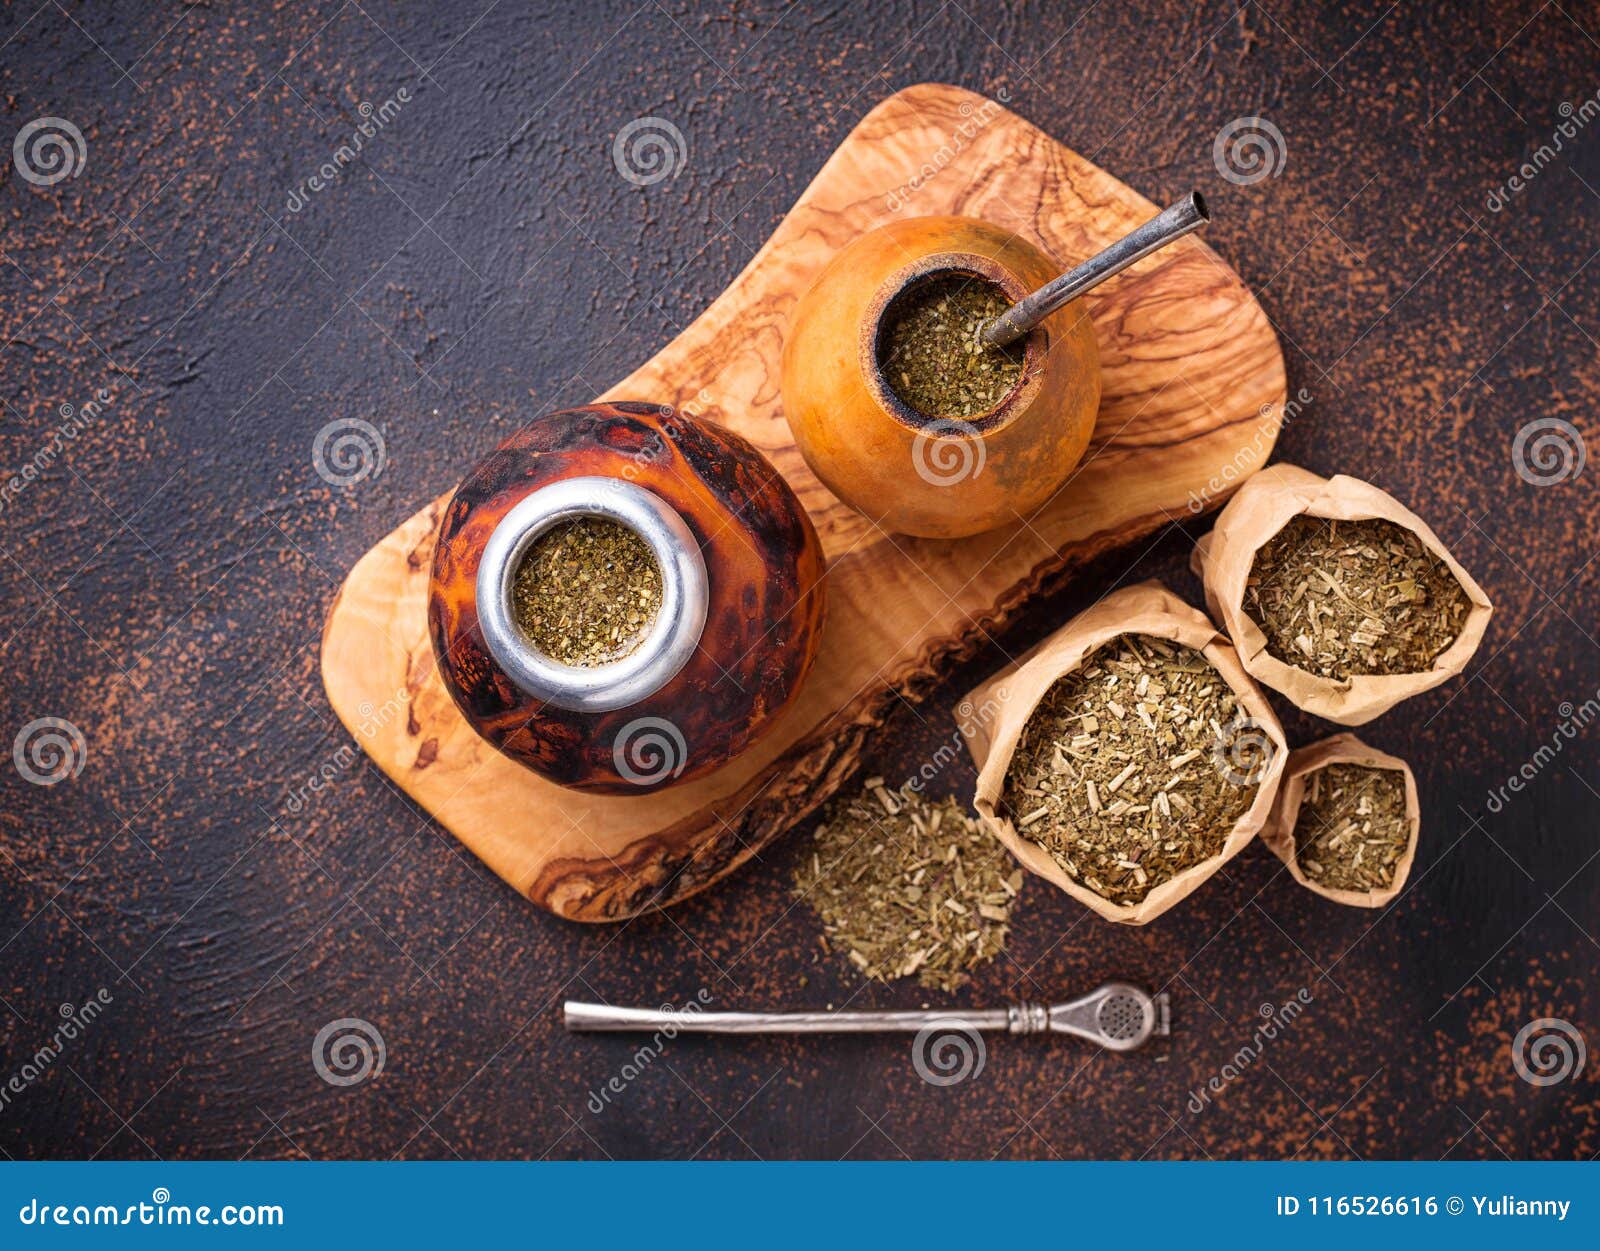 yerba mate tea with calabash and bombilla